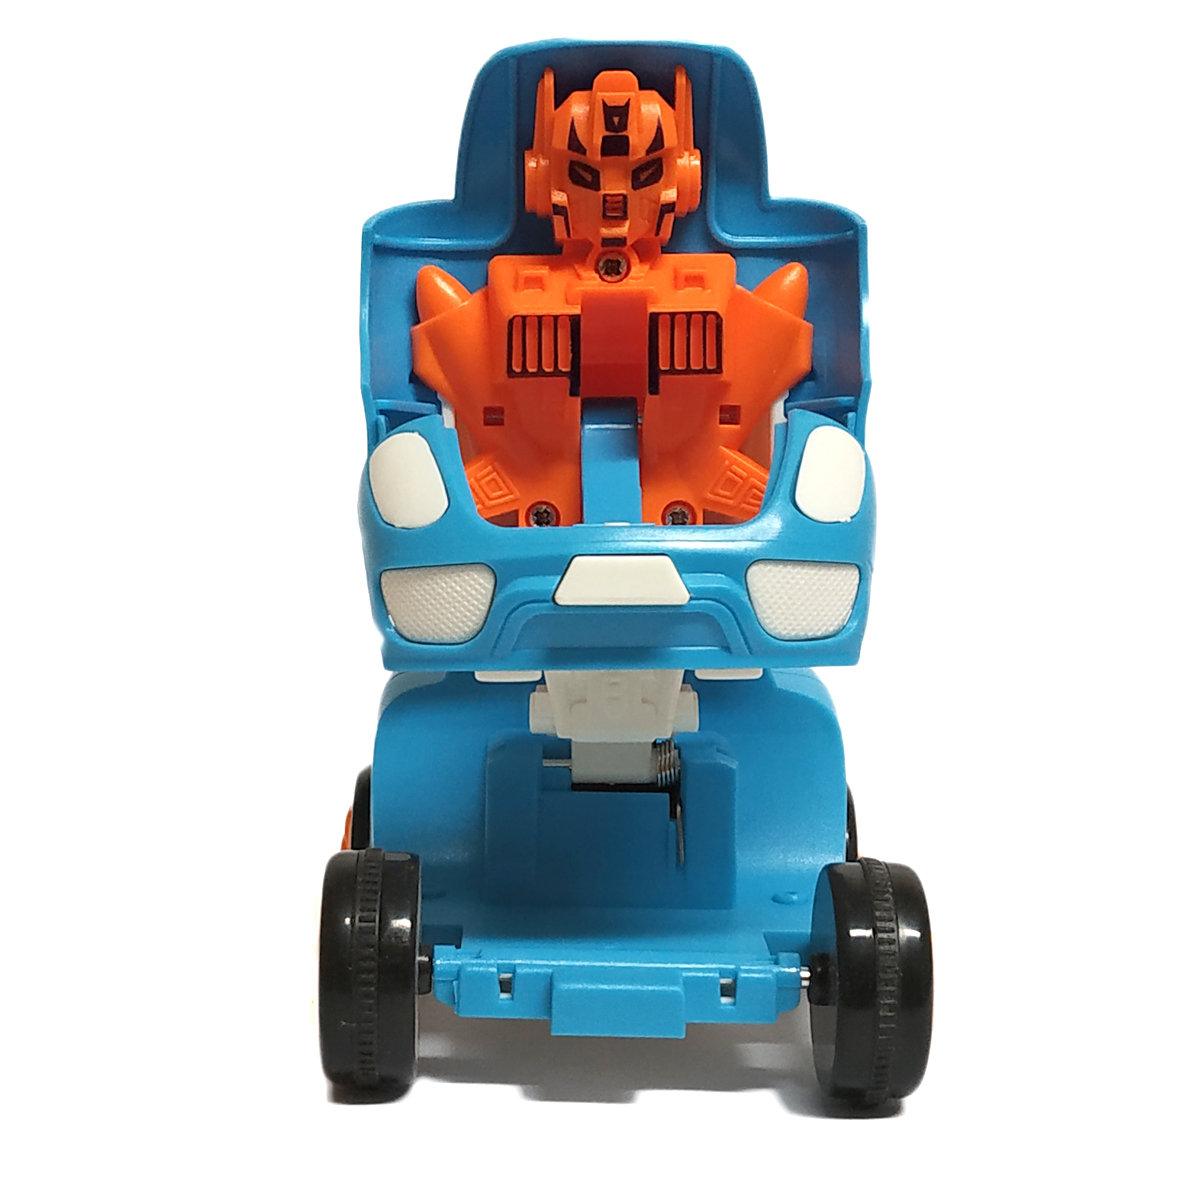 Lefan Wisdom (Transformer Car)-Blue